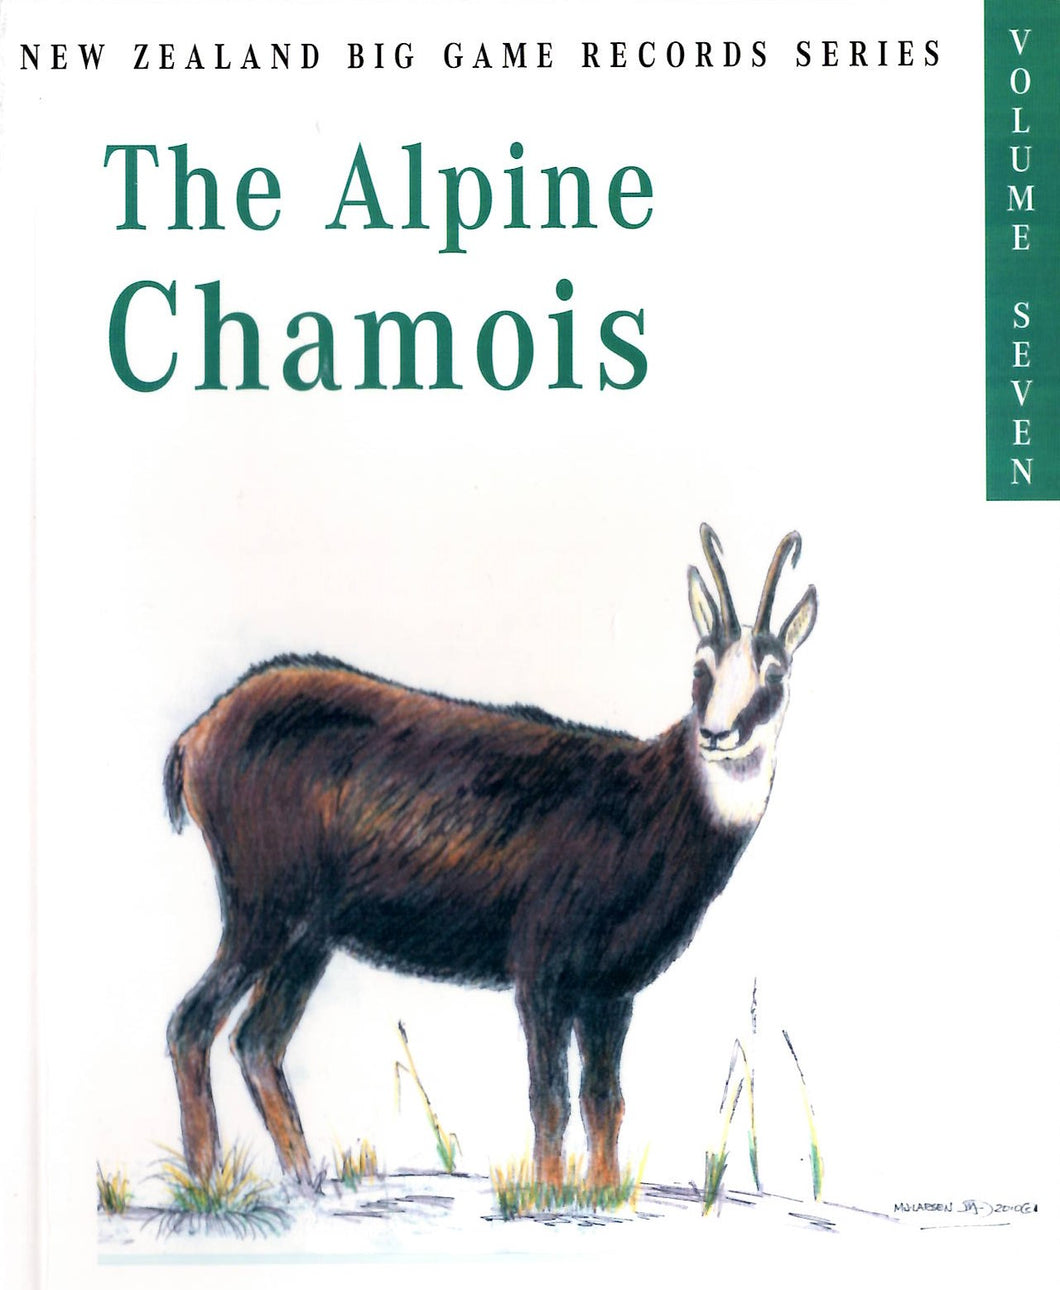 Animalia - Chamois (male) in Characters - UE Marketplace